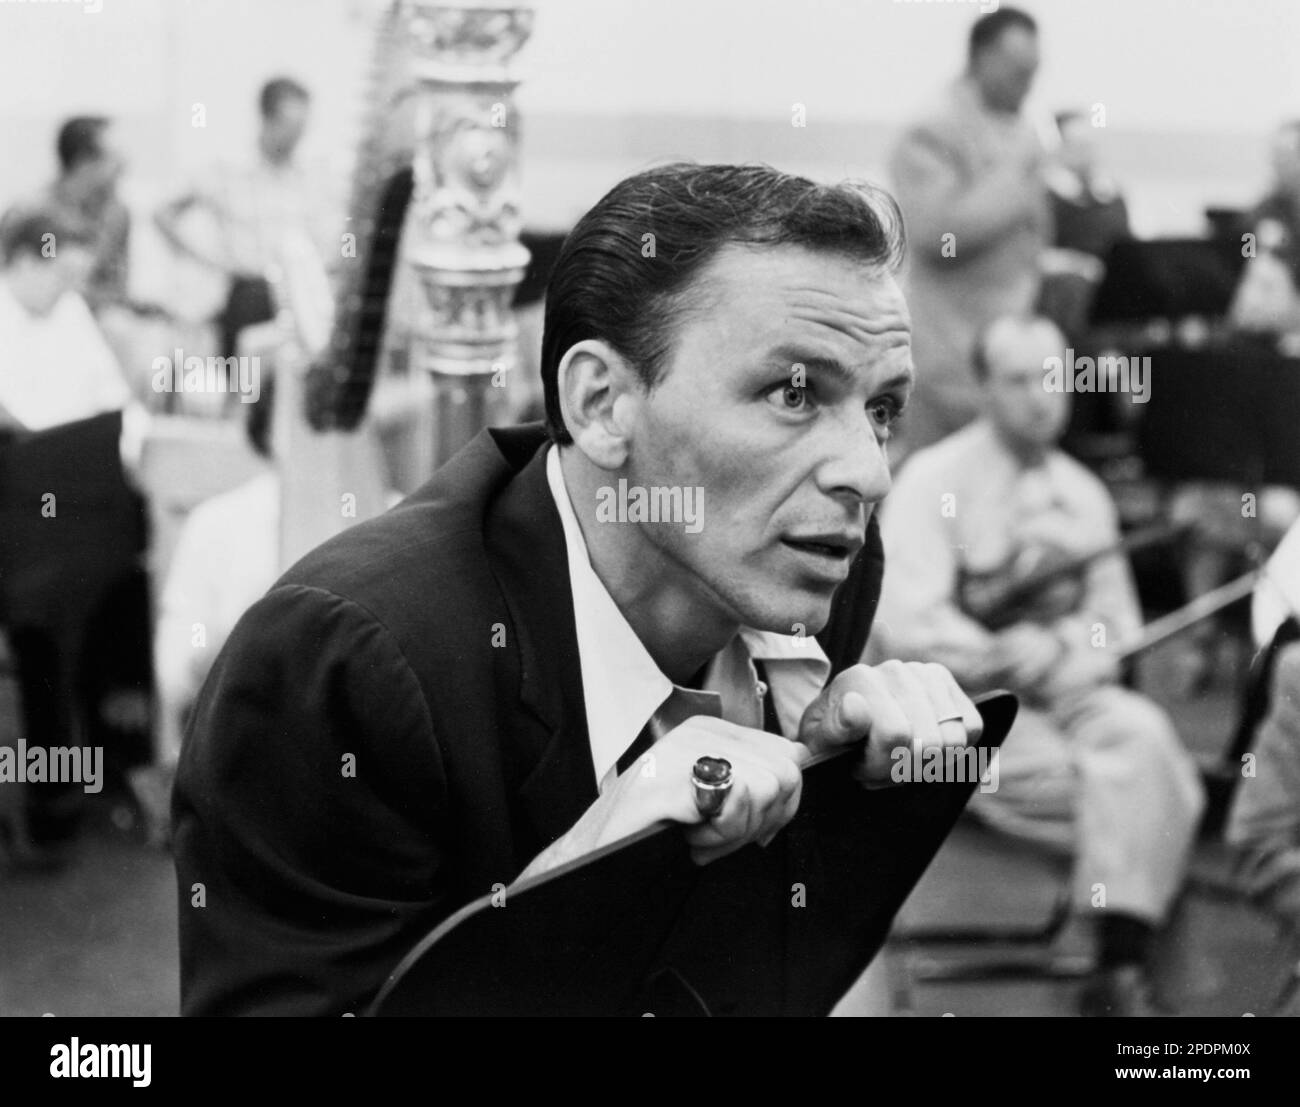 Frank Sinatra dans Rehearsal, c 1950s Banque D'Images